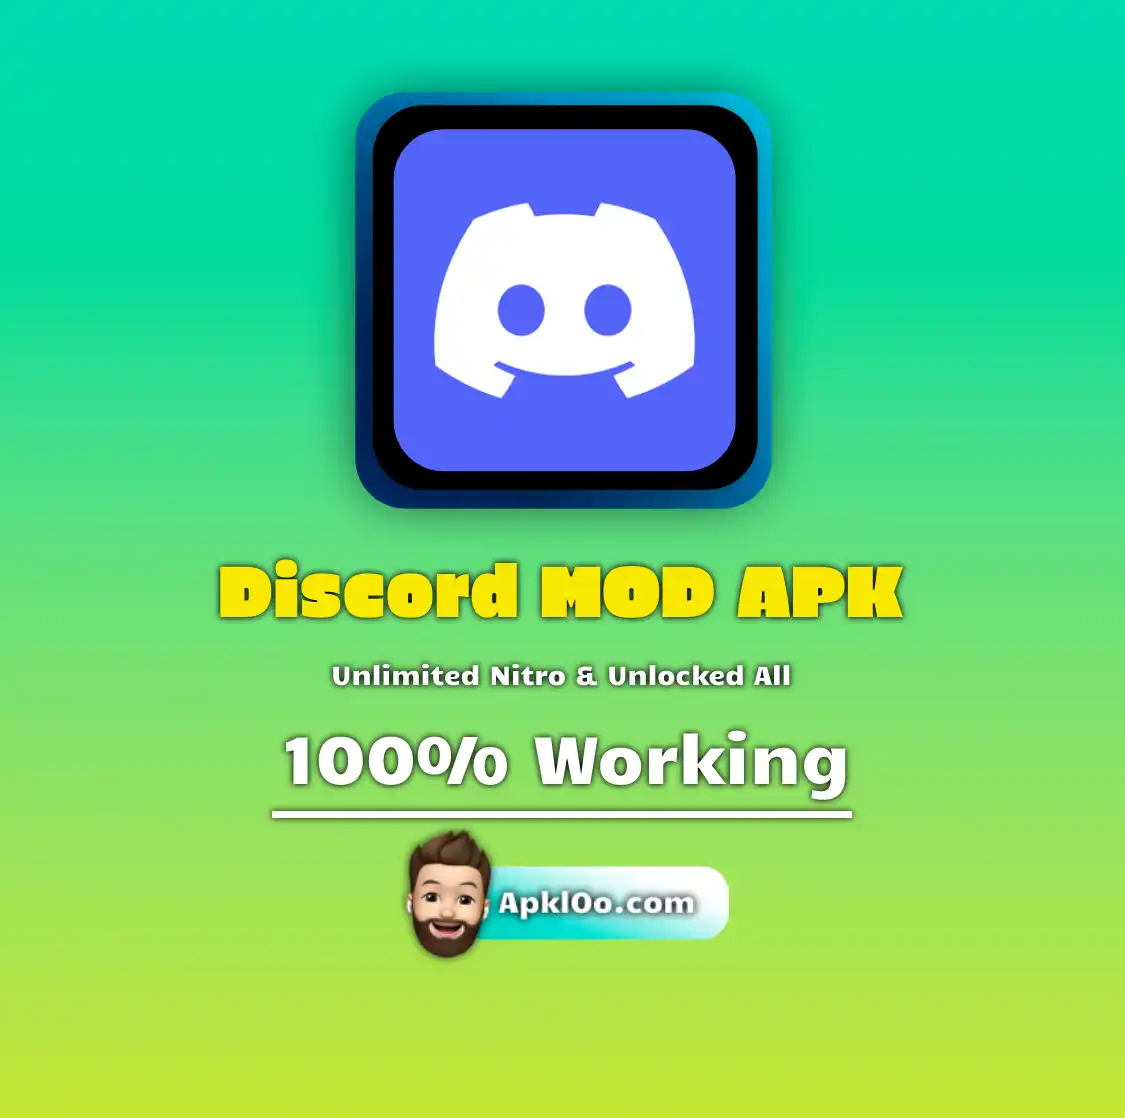 Discord MOD APK